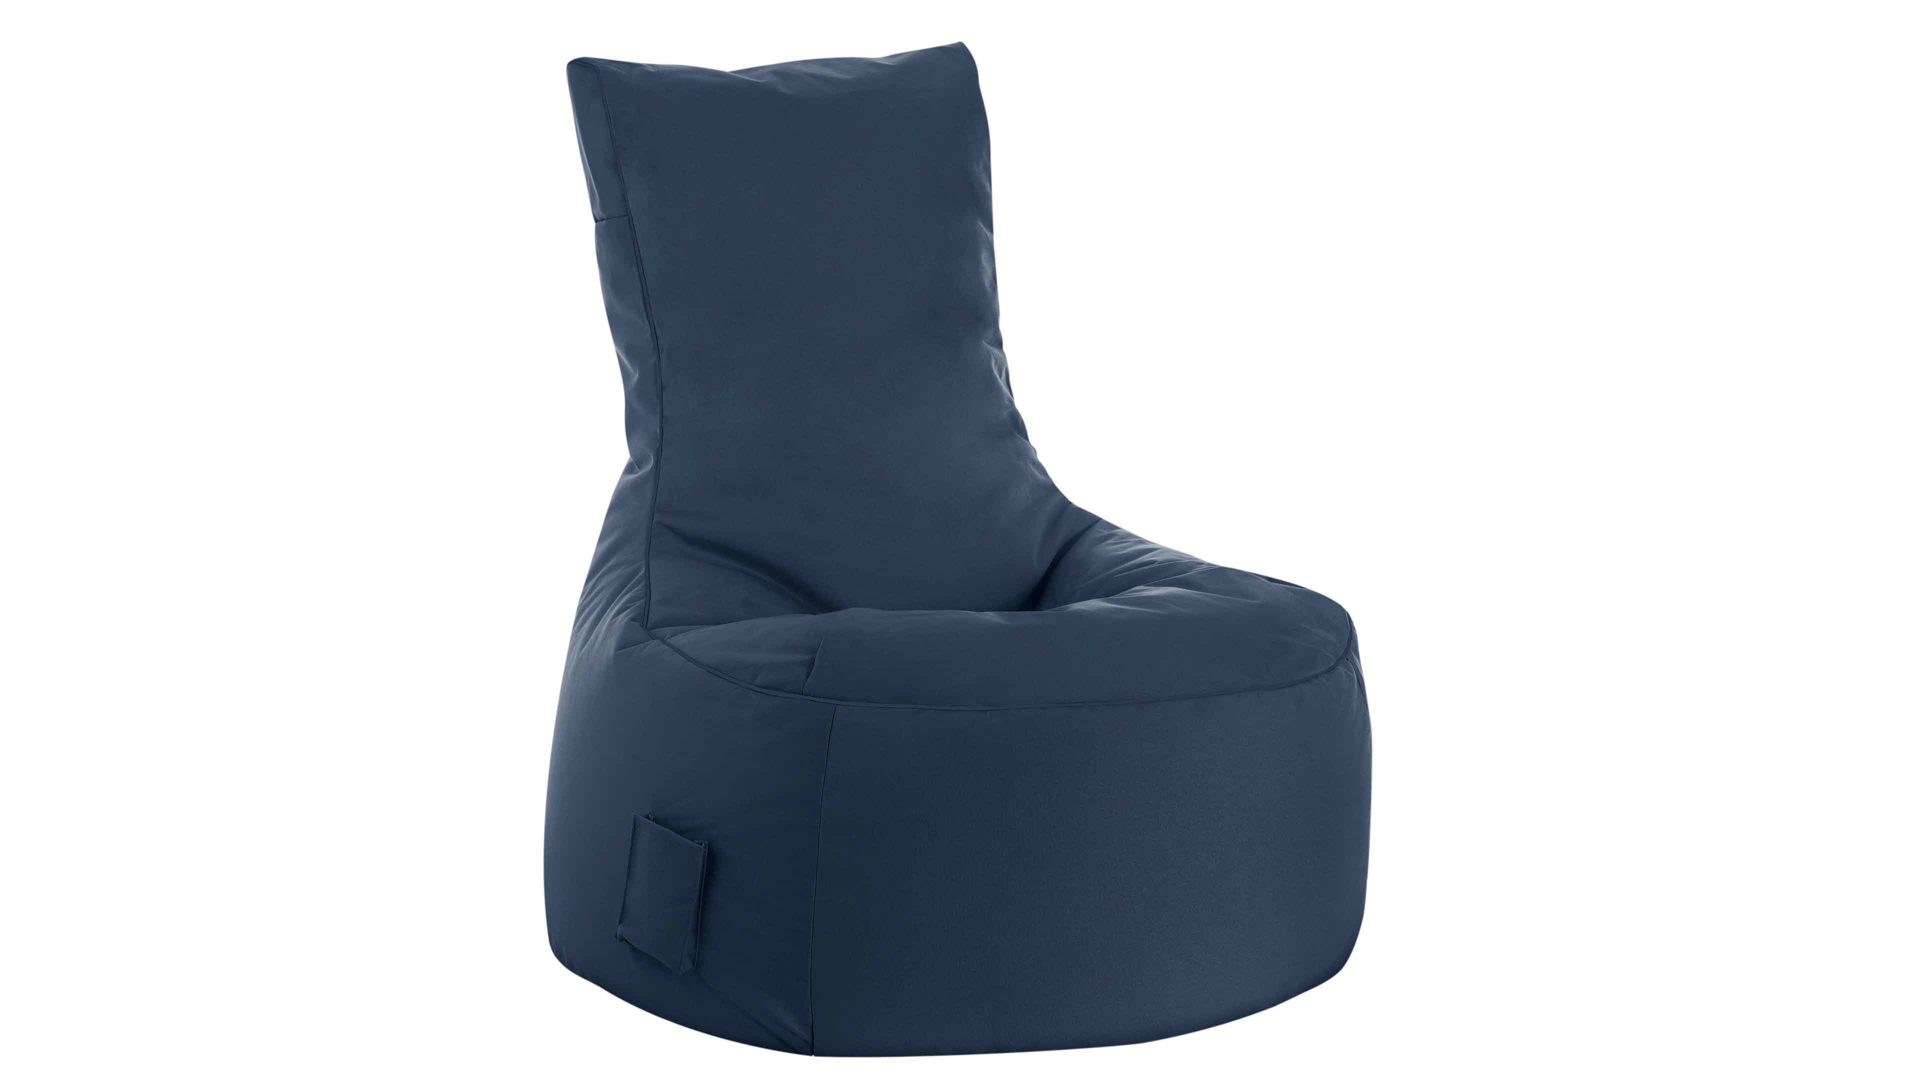 Sitzsack-Sessel Magma sitting point aus Kunstfaser in Jeansblau SITTING POINT Sitzsack-Sessel swing scuba® jeansblaue Kunstfaser - ca. 95 x 90 x 65 cm